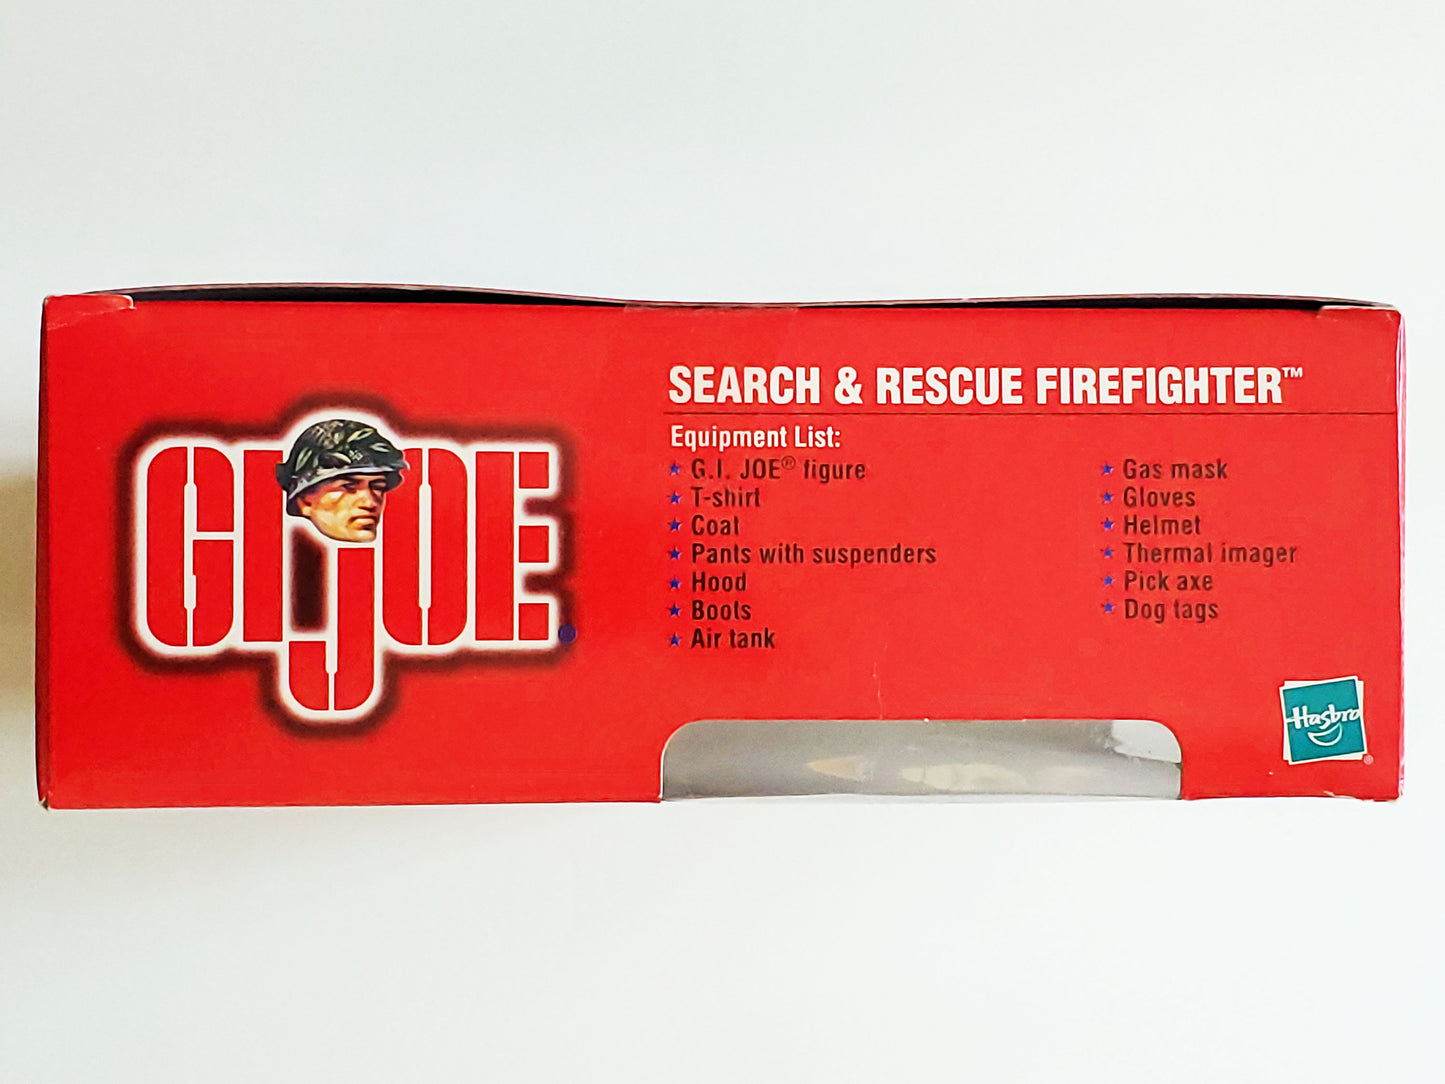 G.I. Joe Search & Rescue Firefighter (Caucasian)